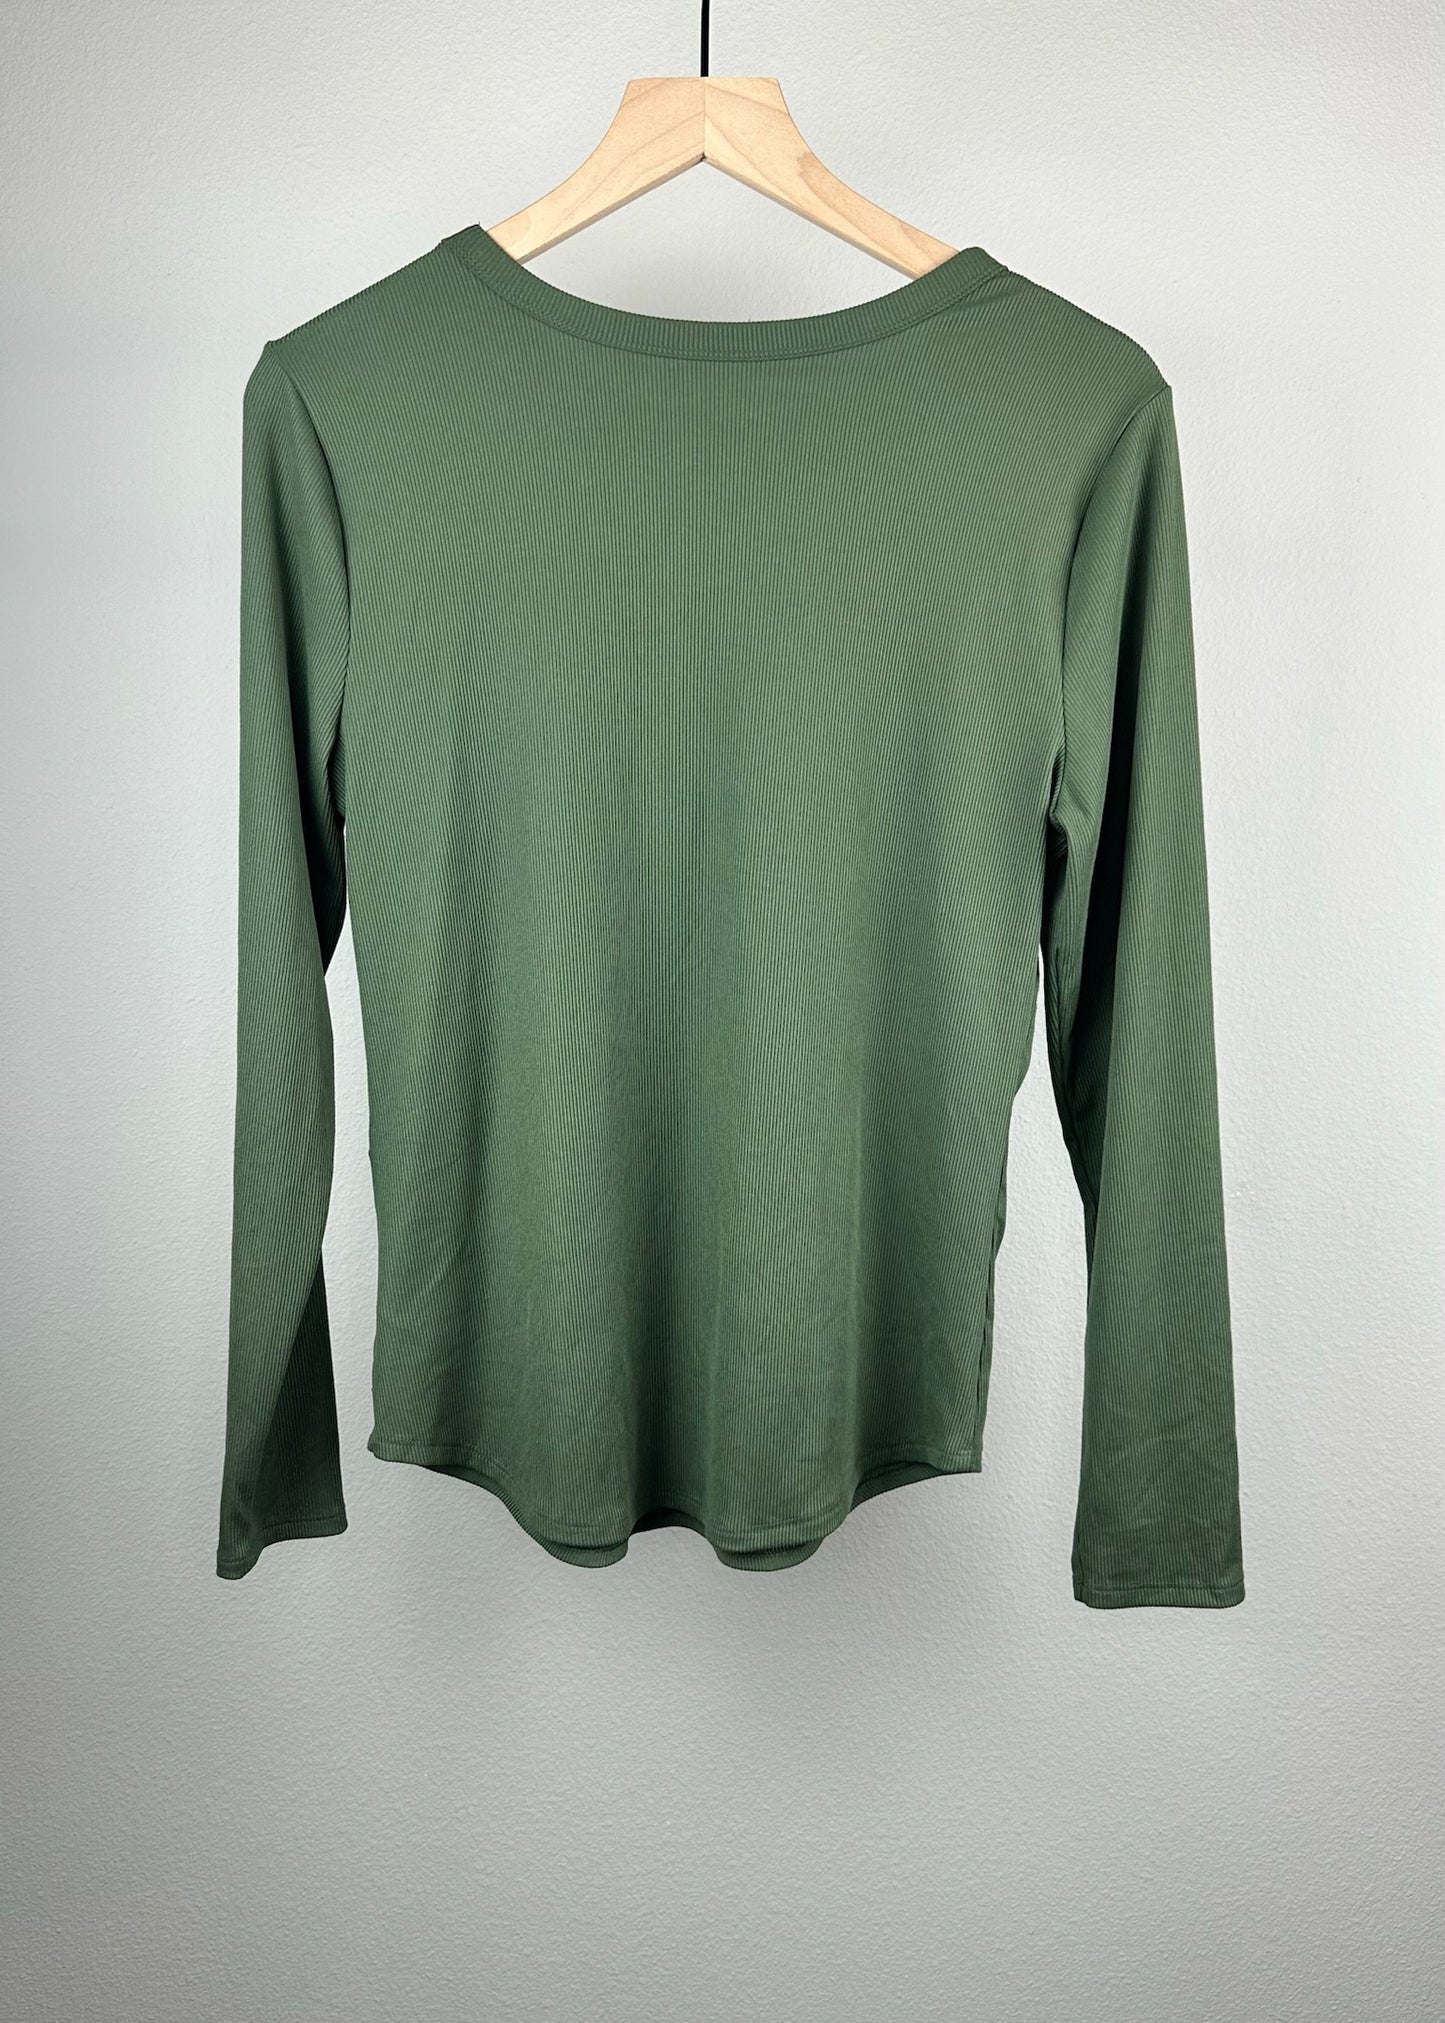 Green Long Sleeve Shirt by No Boundaries